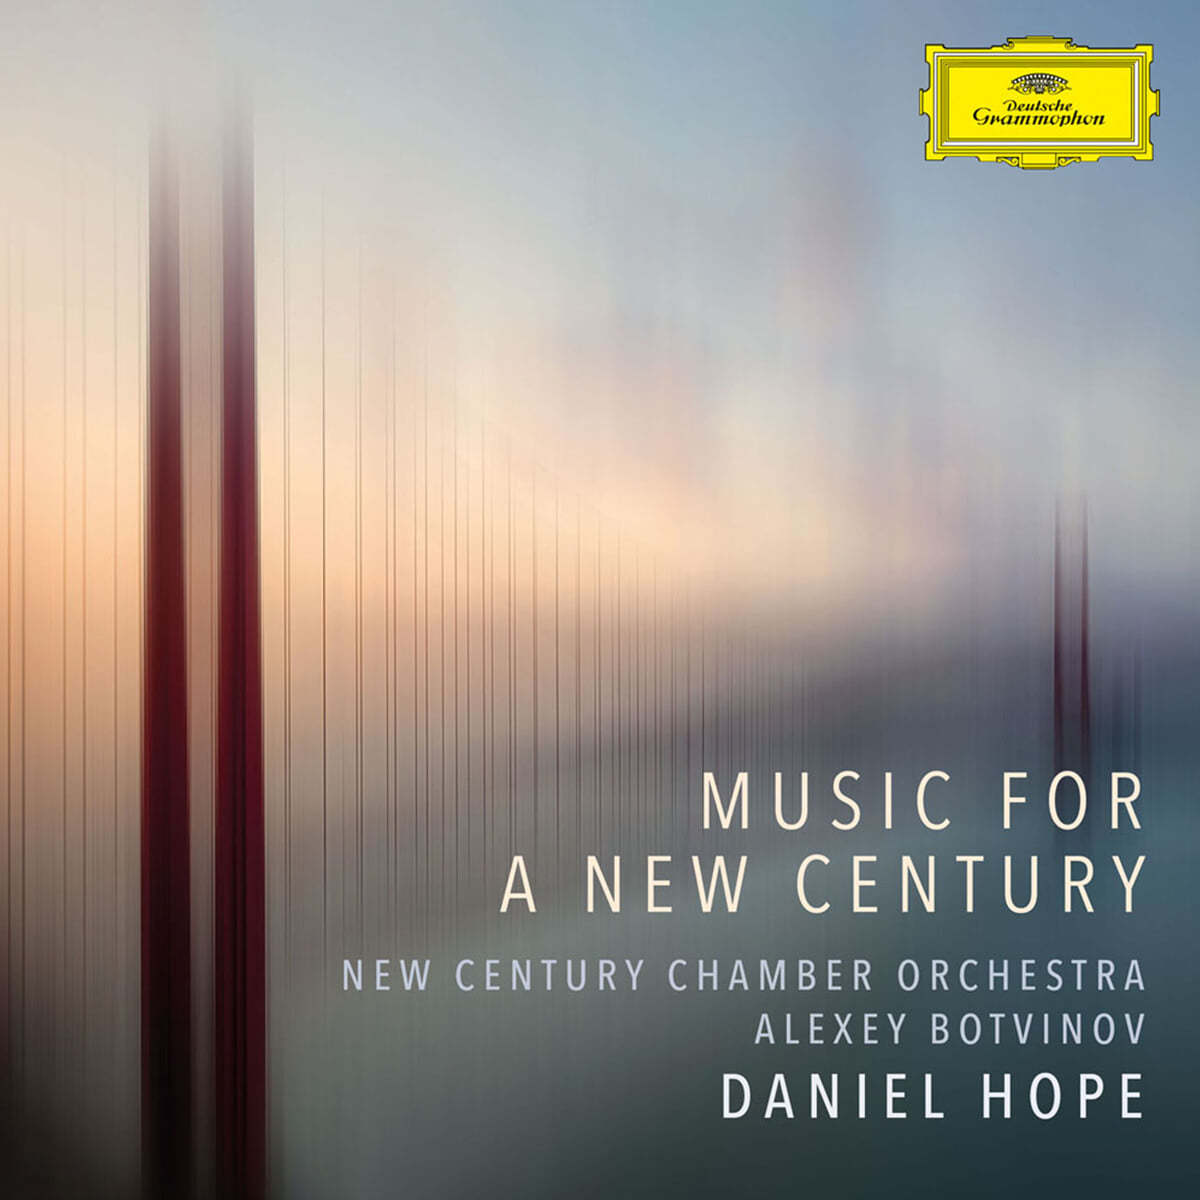 Daniel Hope 뉴 센츄리 체임버 오케스트라를 위한 음악 - 필립 글래스, 탄 둔, 터니지, 헤기 (Music For A New Century)